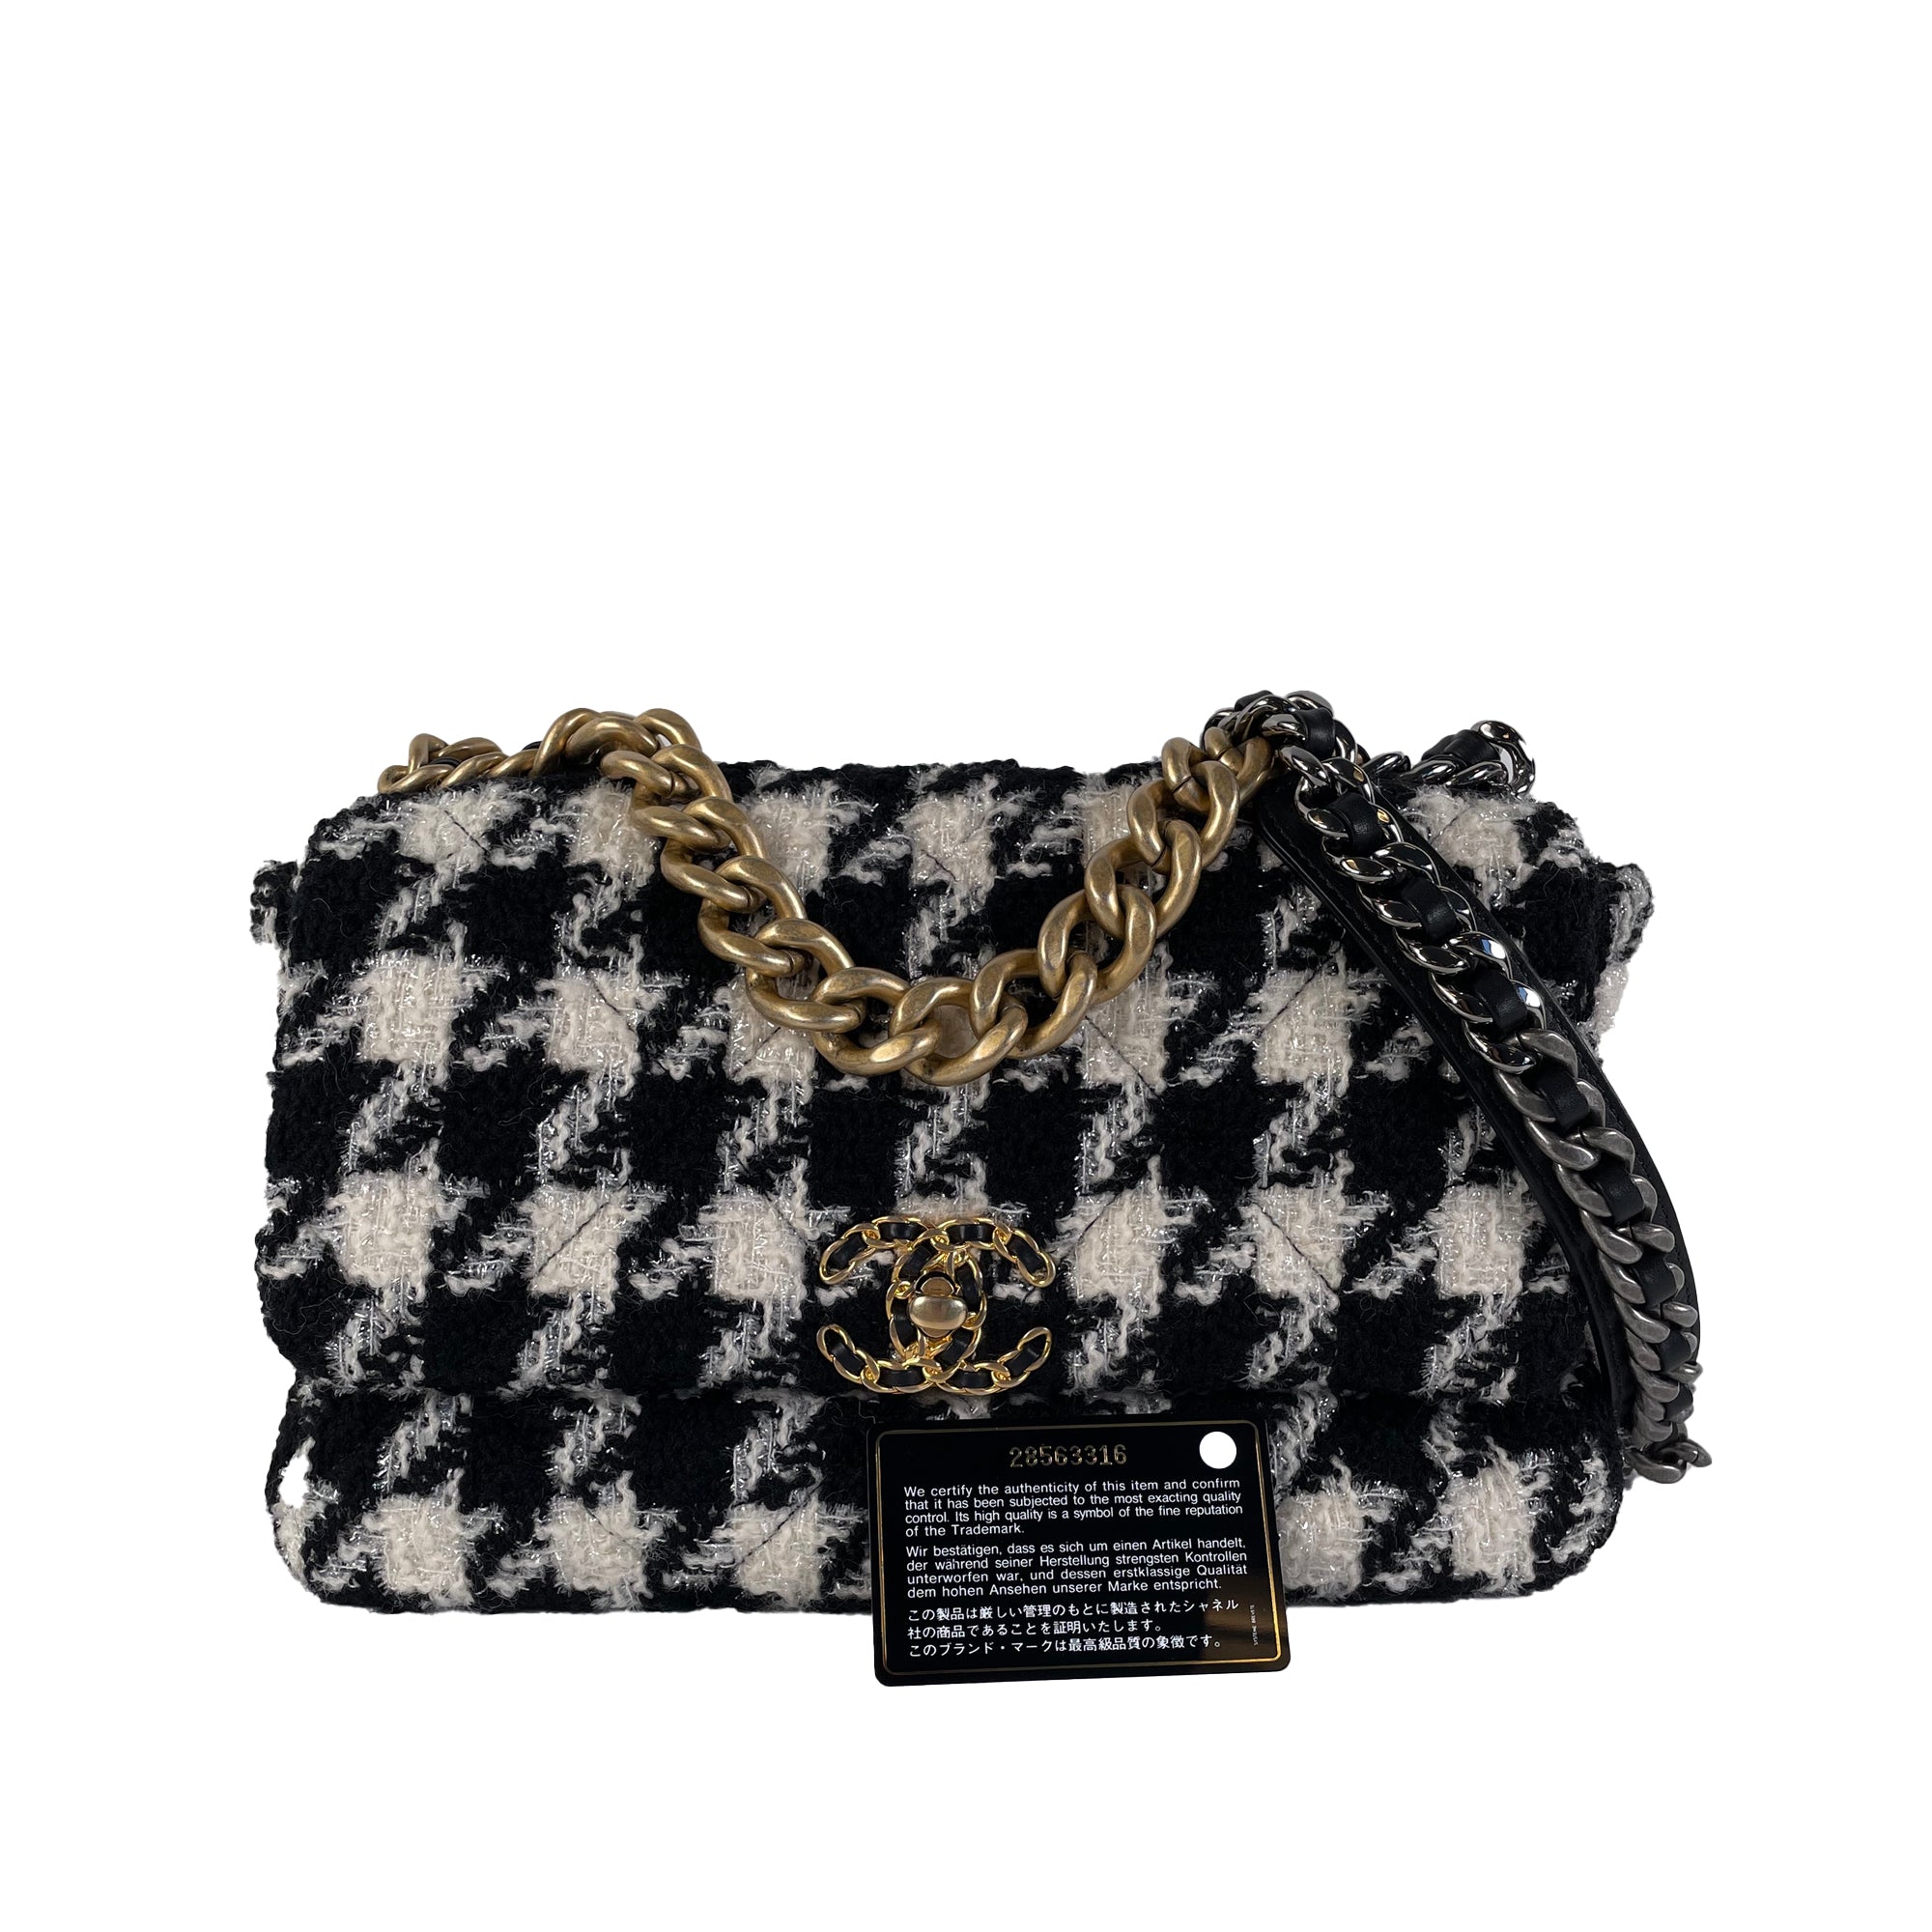 Chanel 19 Flap Bag Medium Black/White Tweed Gold